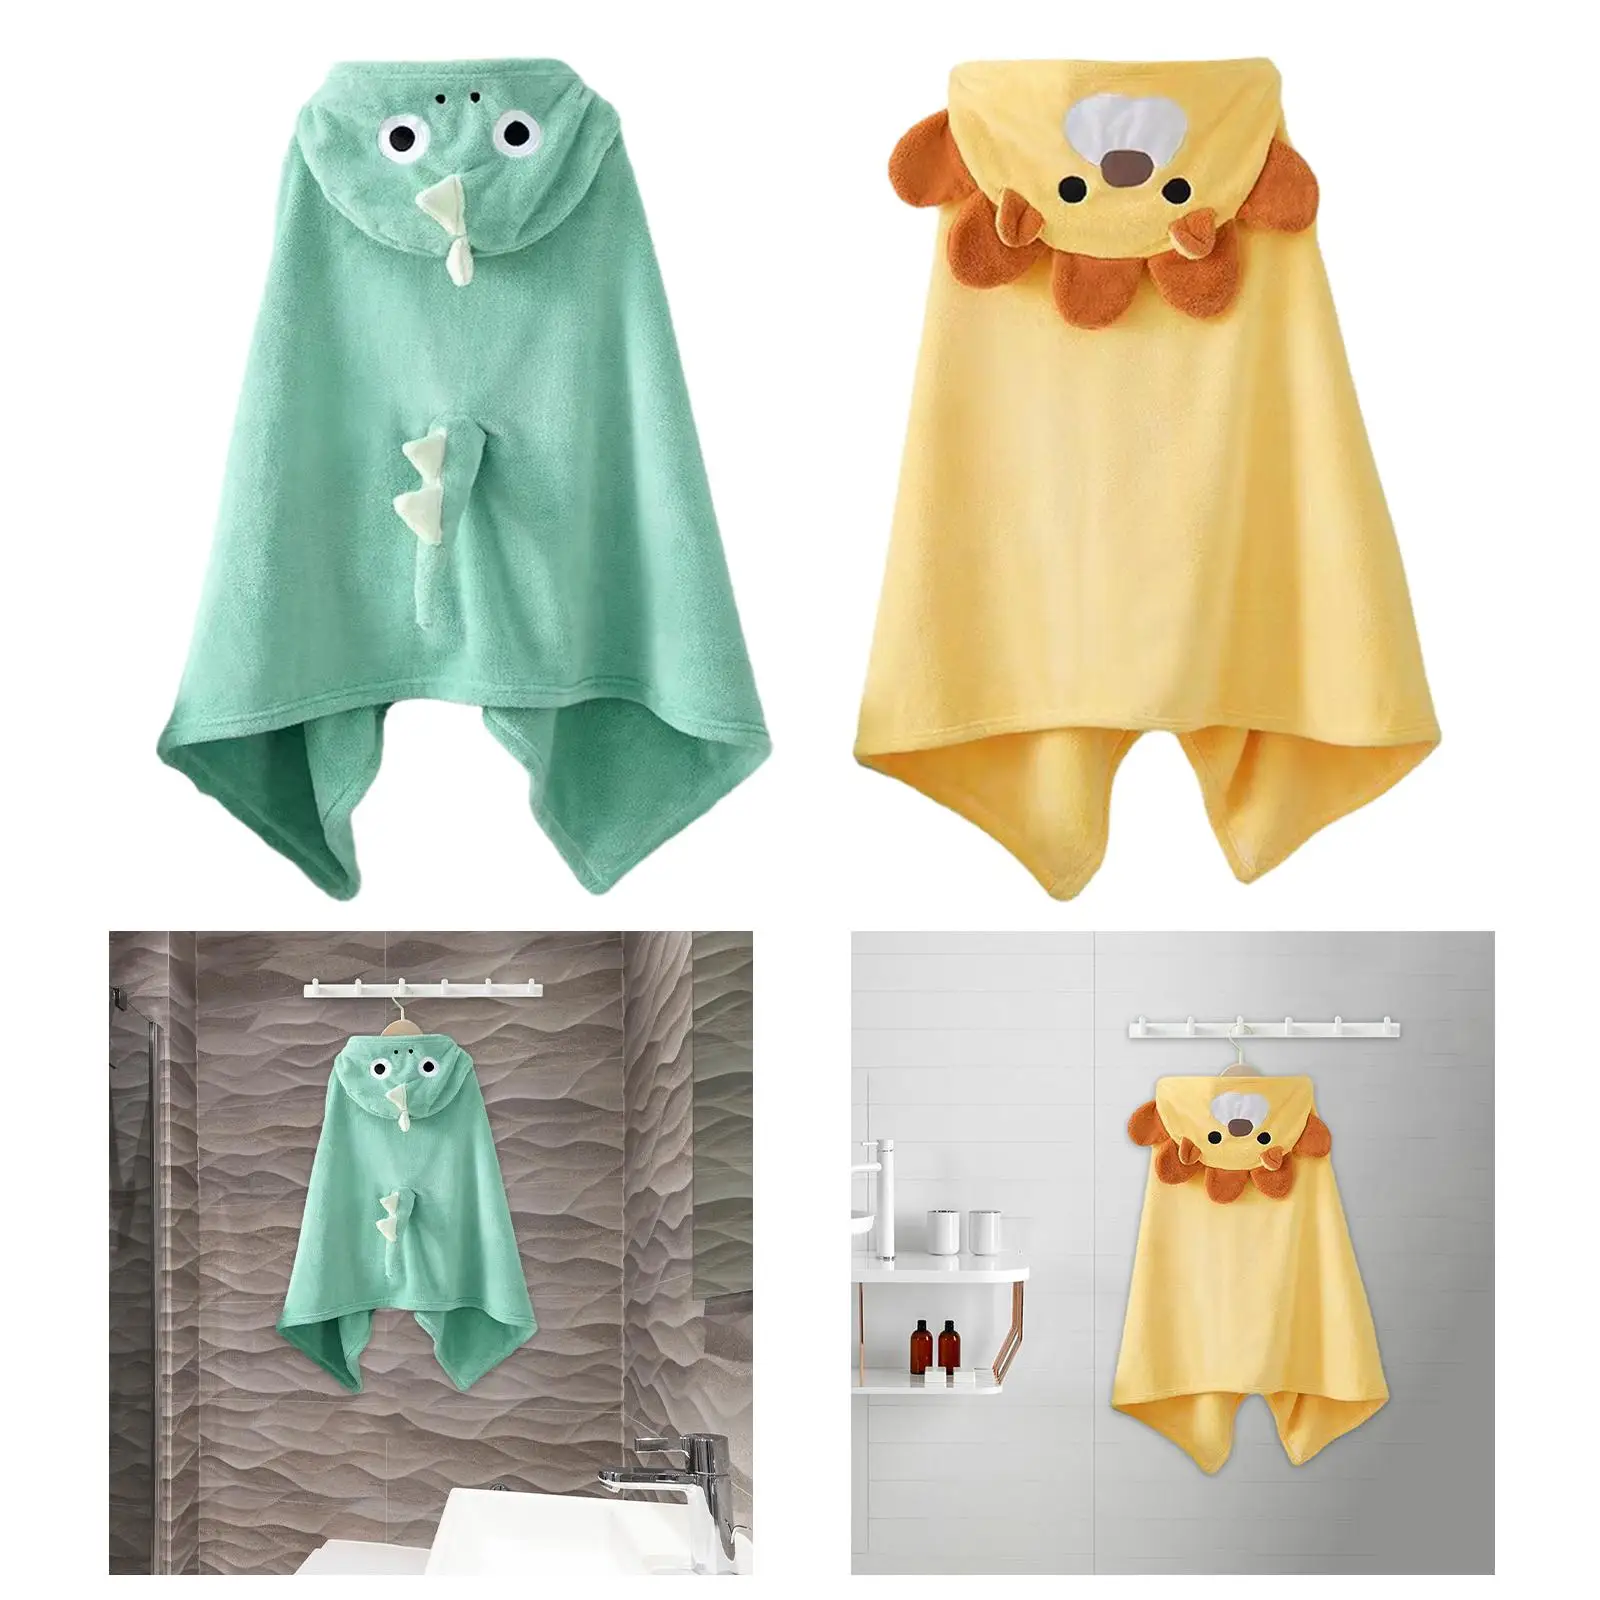 Toddlers Bathrobe with Hood Stylish for Baby Boys Girls Soft and Comfortable Infant Towel Blanket Animal Hooded Bathrobe